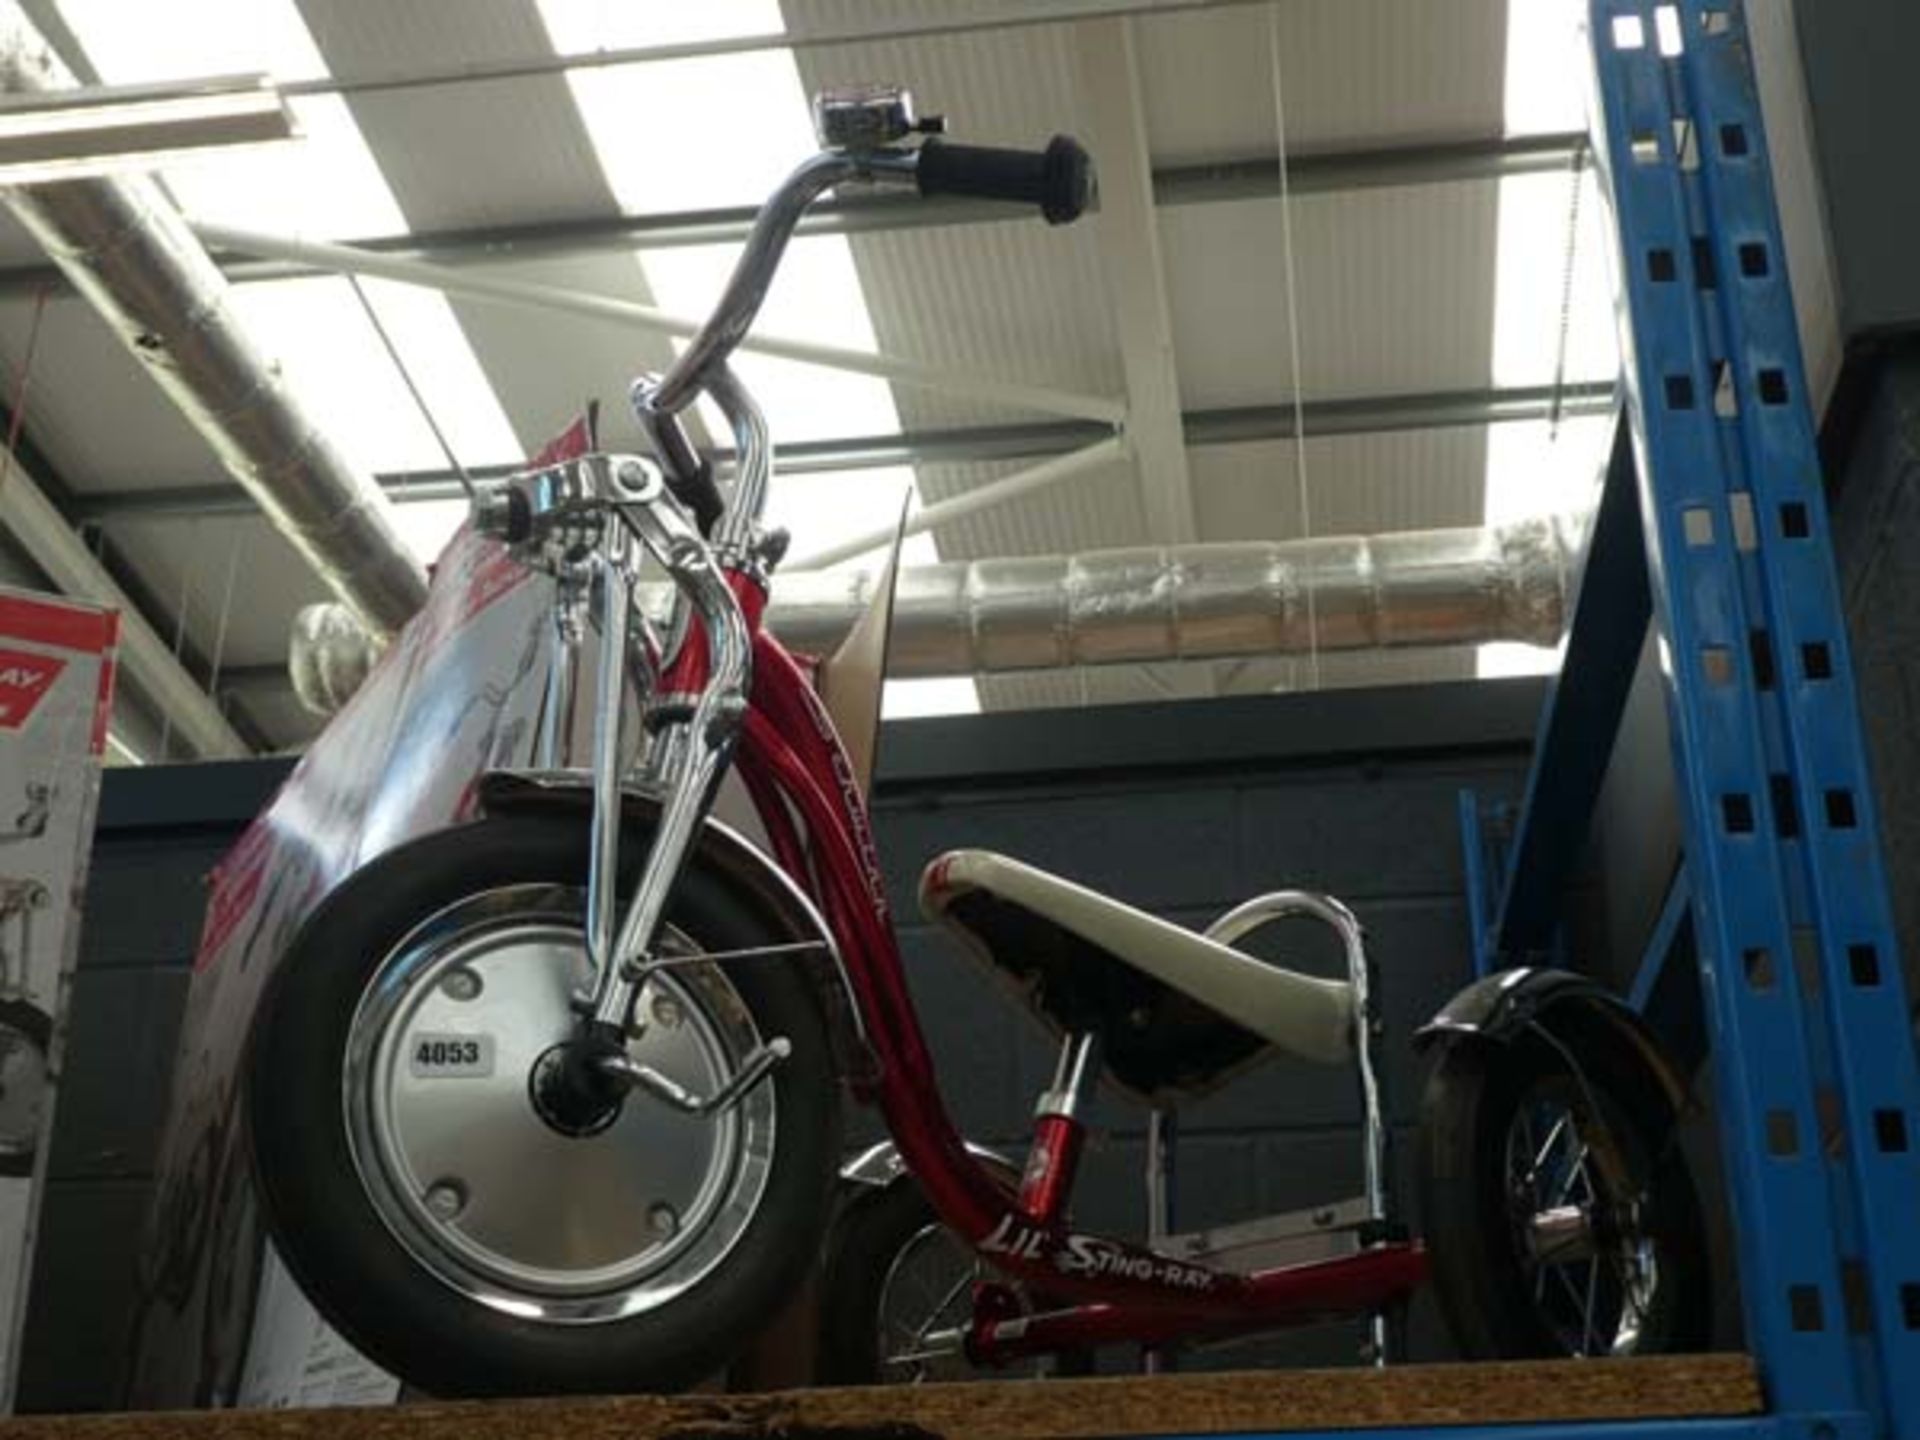 4056 - Schwinn tricycle